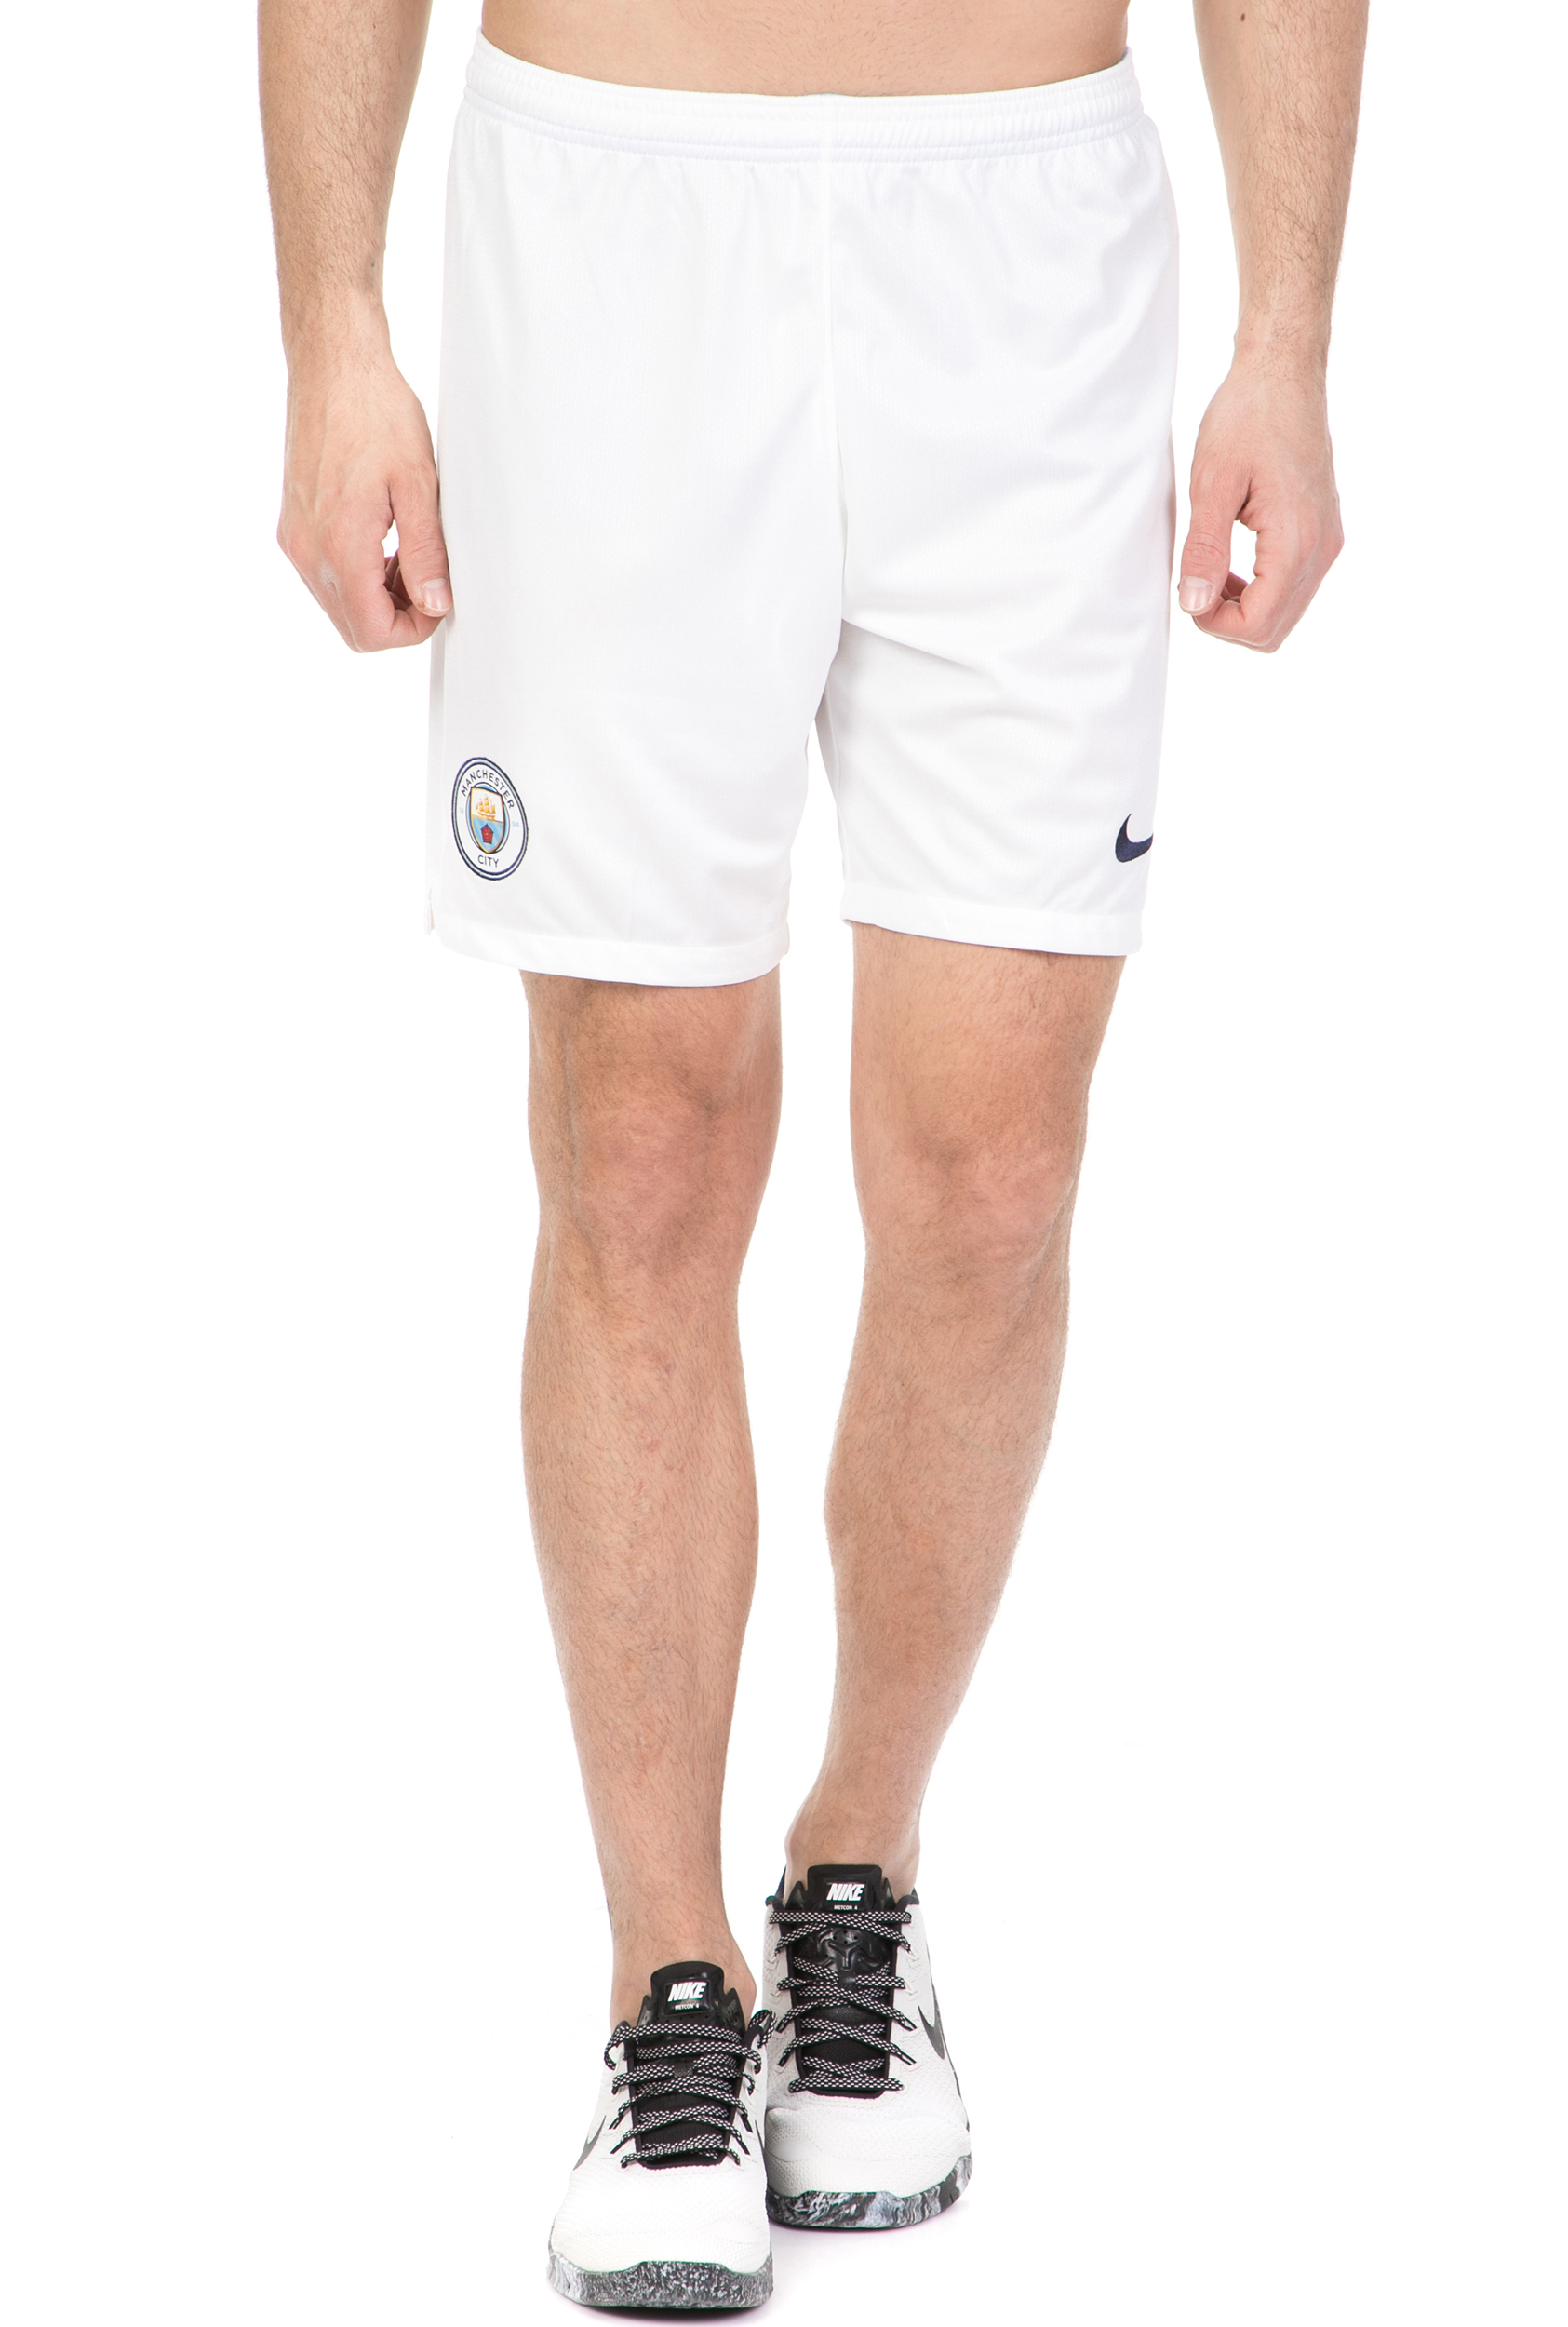 NIKE - Ανδρικό ποδοσφαιρικό σορτς MCFC NIKE λευκό Ανδρικά/Ρούχα/Σορτς-Βερμούδες/Αθλητικά